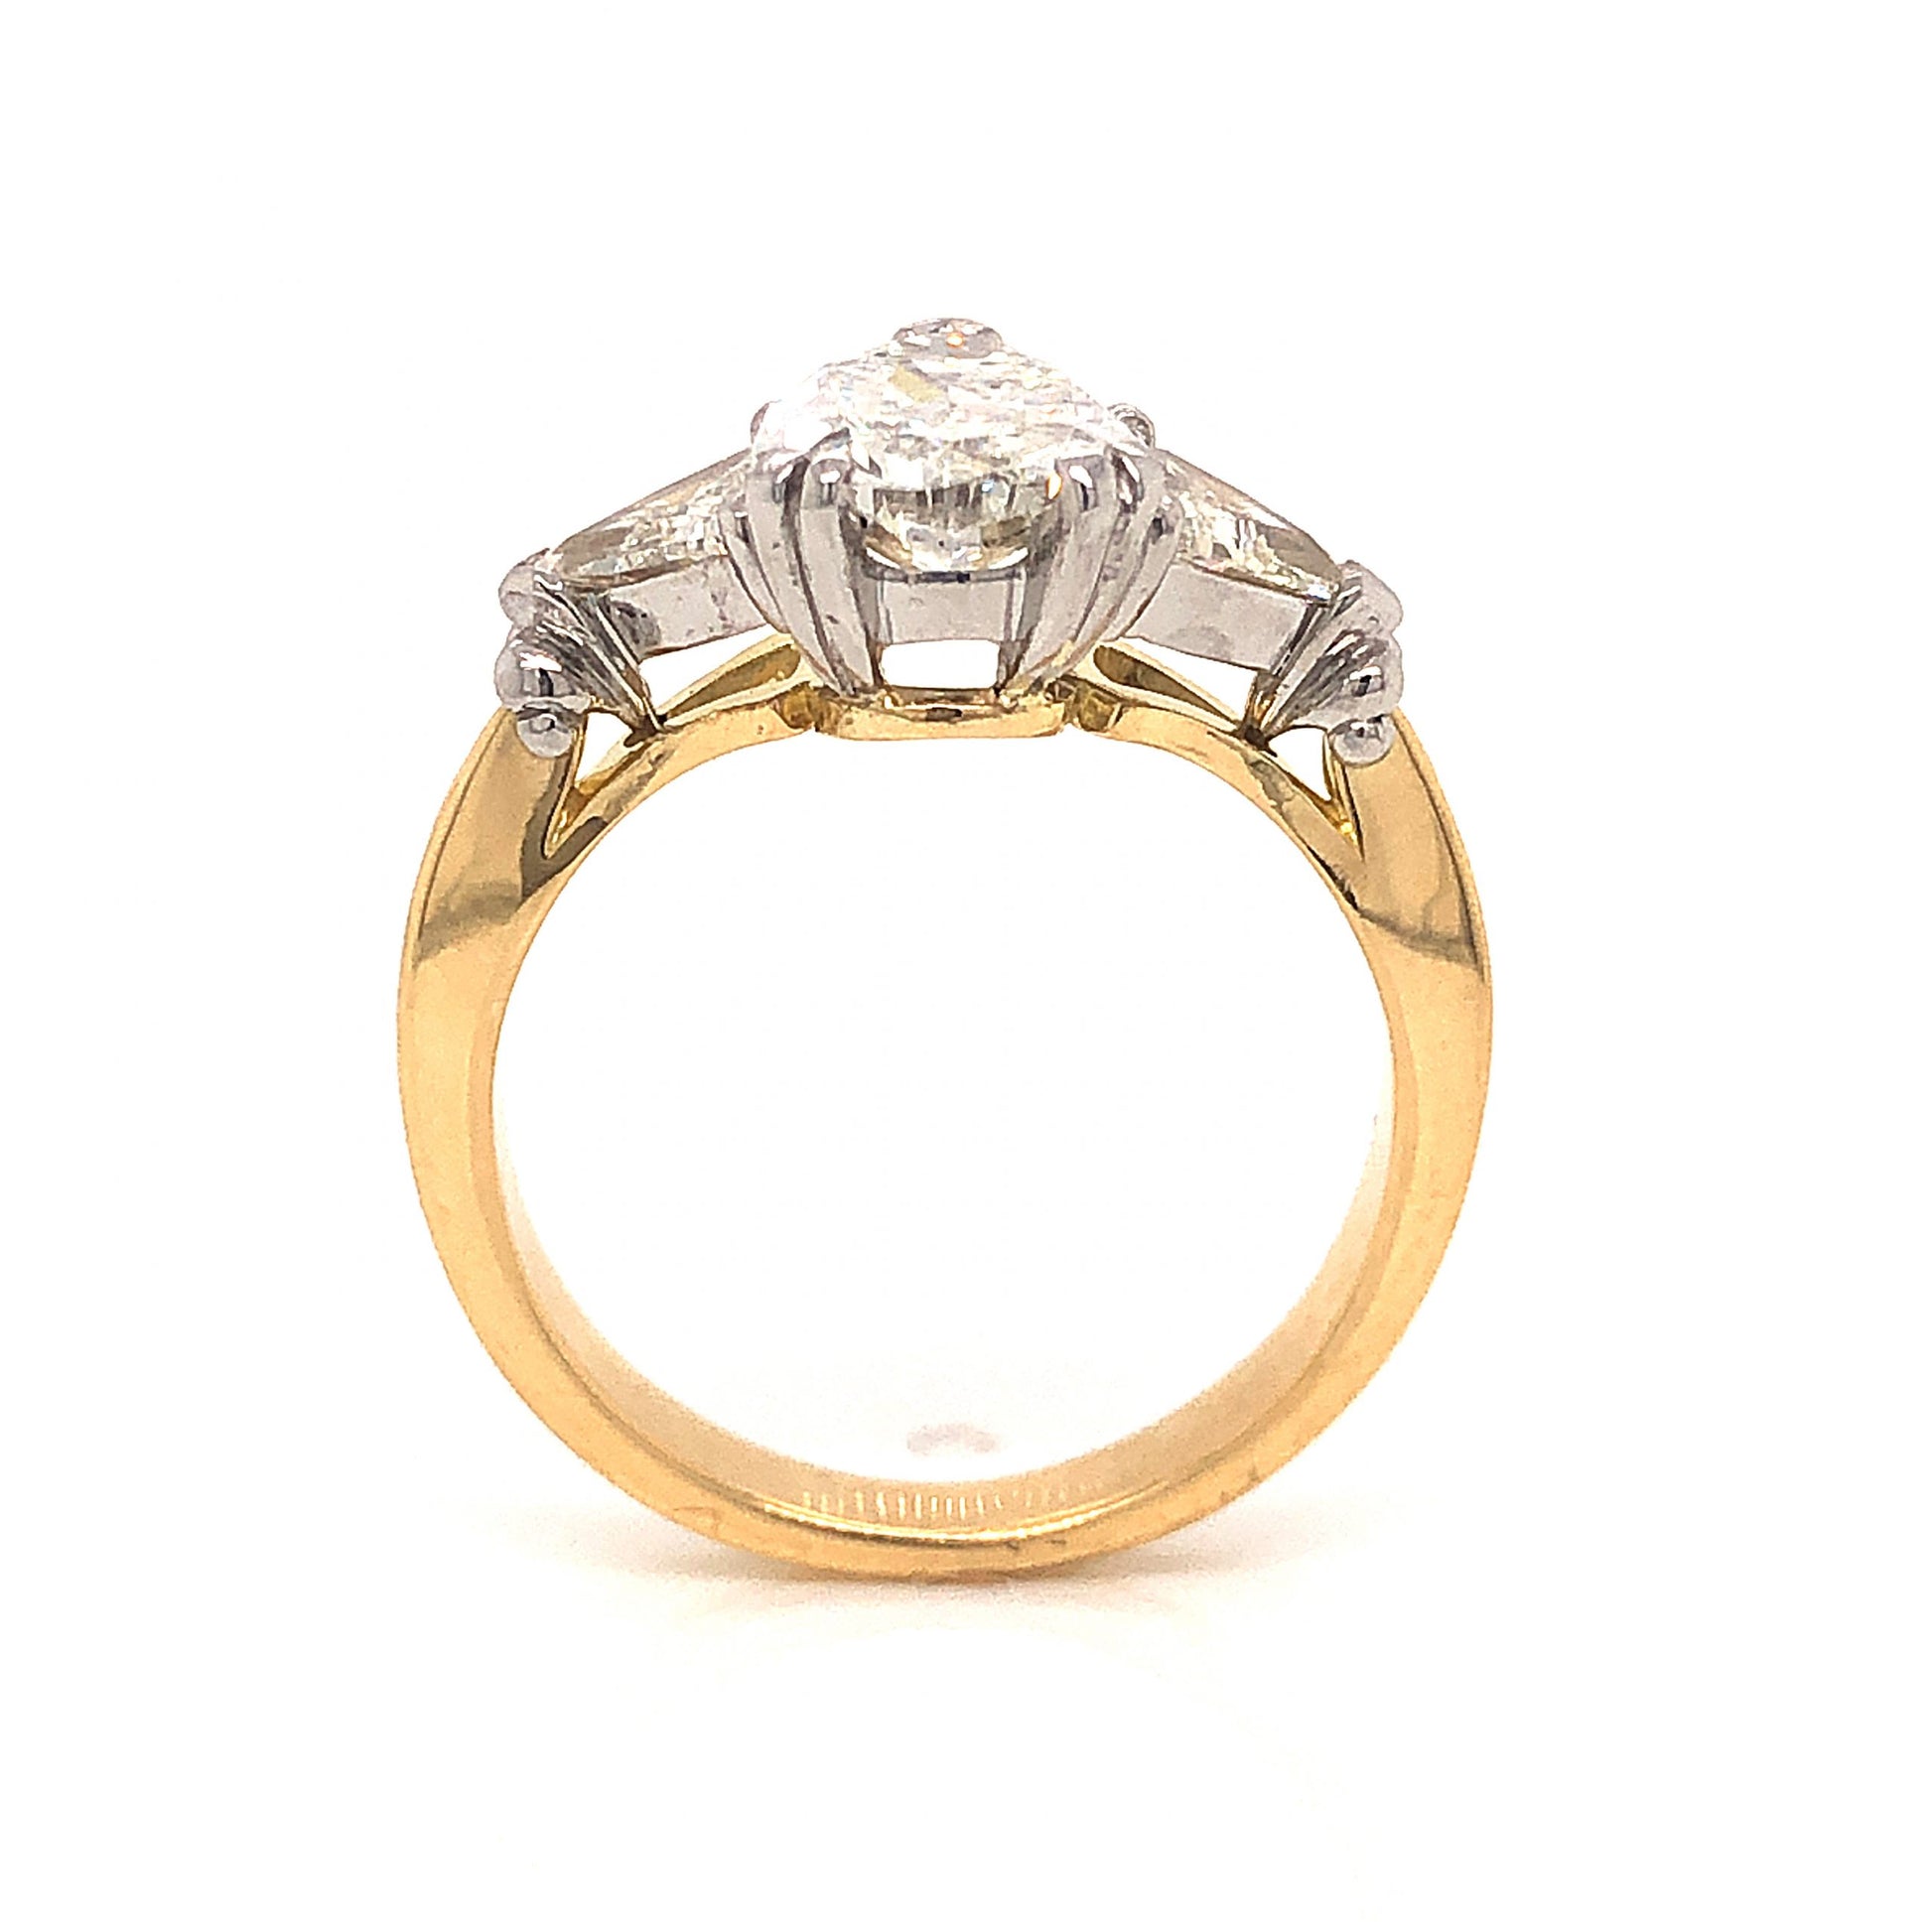 2.08 Pear Cut Diamond Engagement Ring in 18k GoldComposition: 18 Karat Yellow Gold/18 Karat White GoldRing Size: 6.75Total Diamond Weight: 3.13 ctTotal Gram Weight: 6.3 g